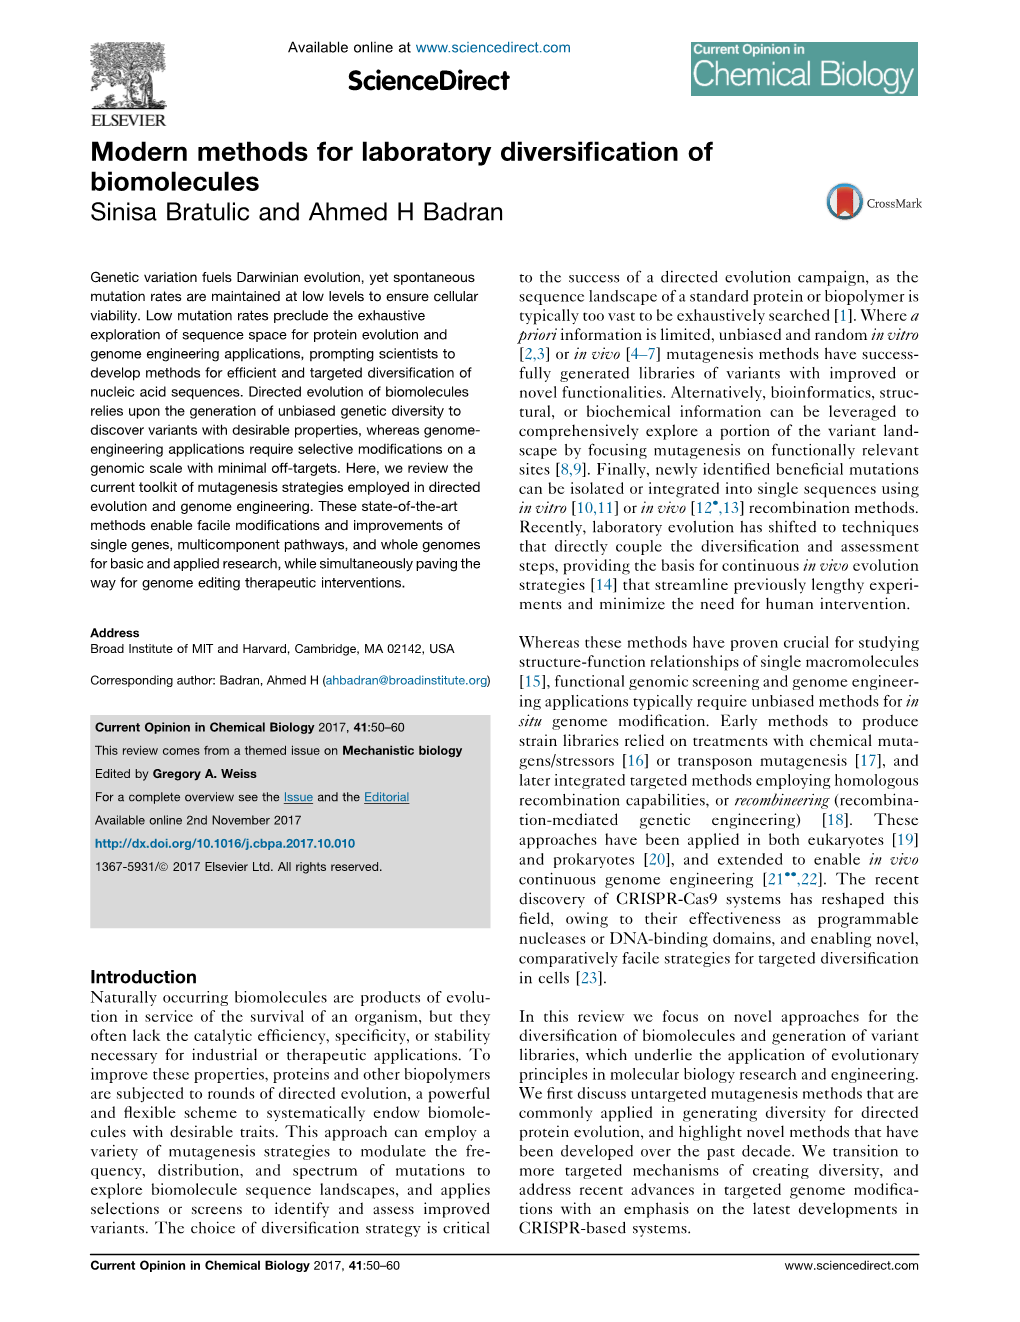 Modern Methods for Laboratory Diversification of Biomolecules Bratulic and Badran 51